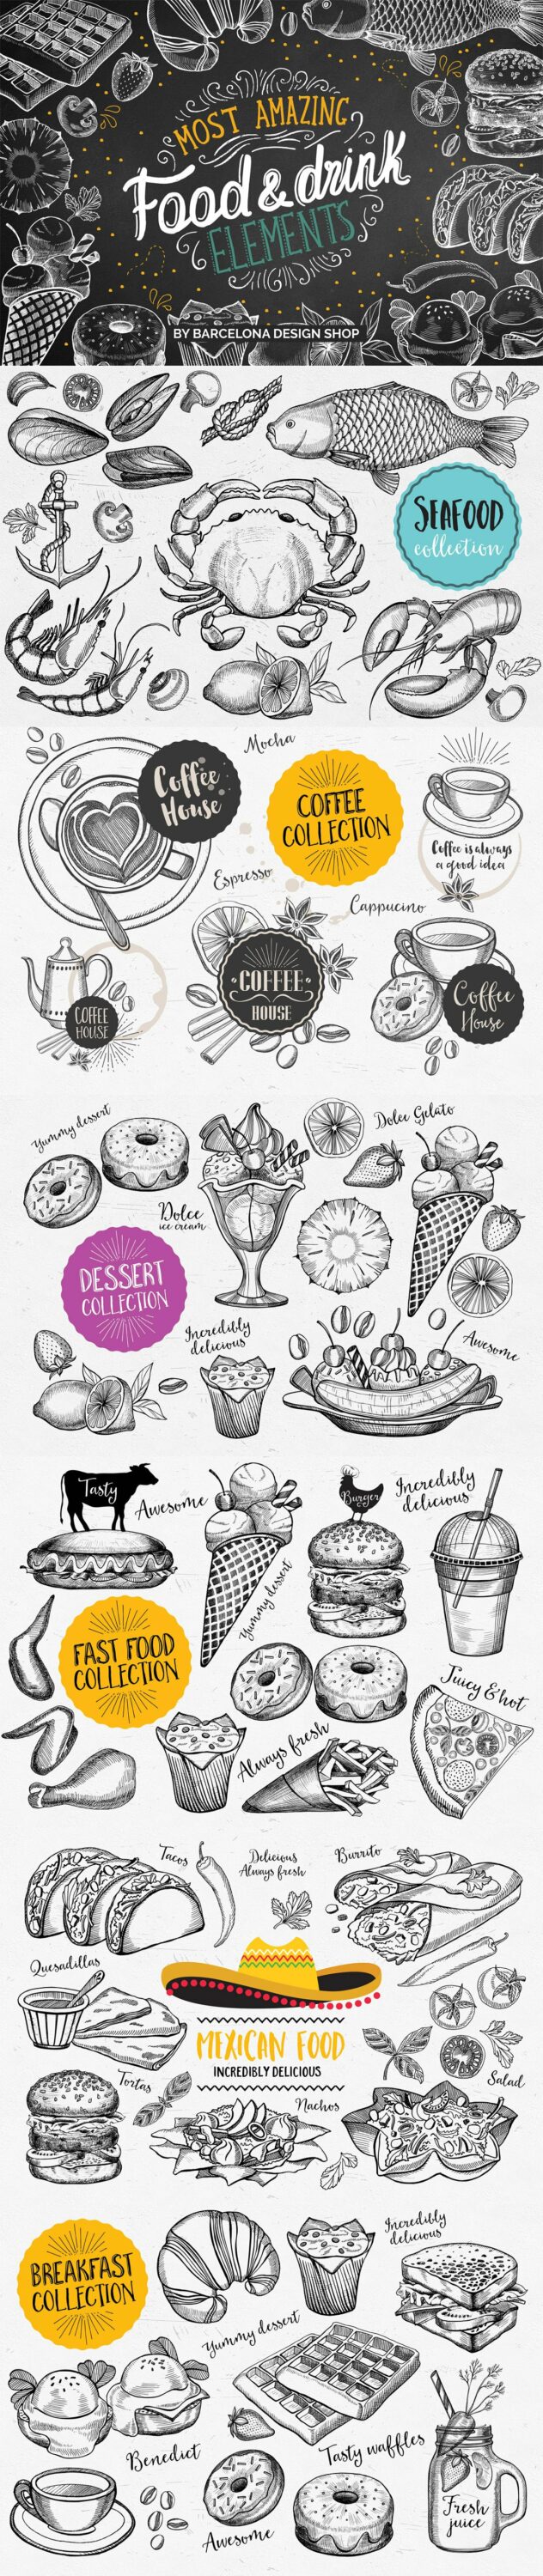 Food menu design illustration.